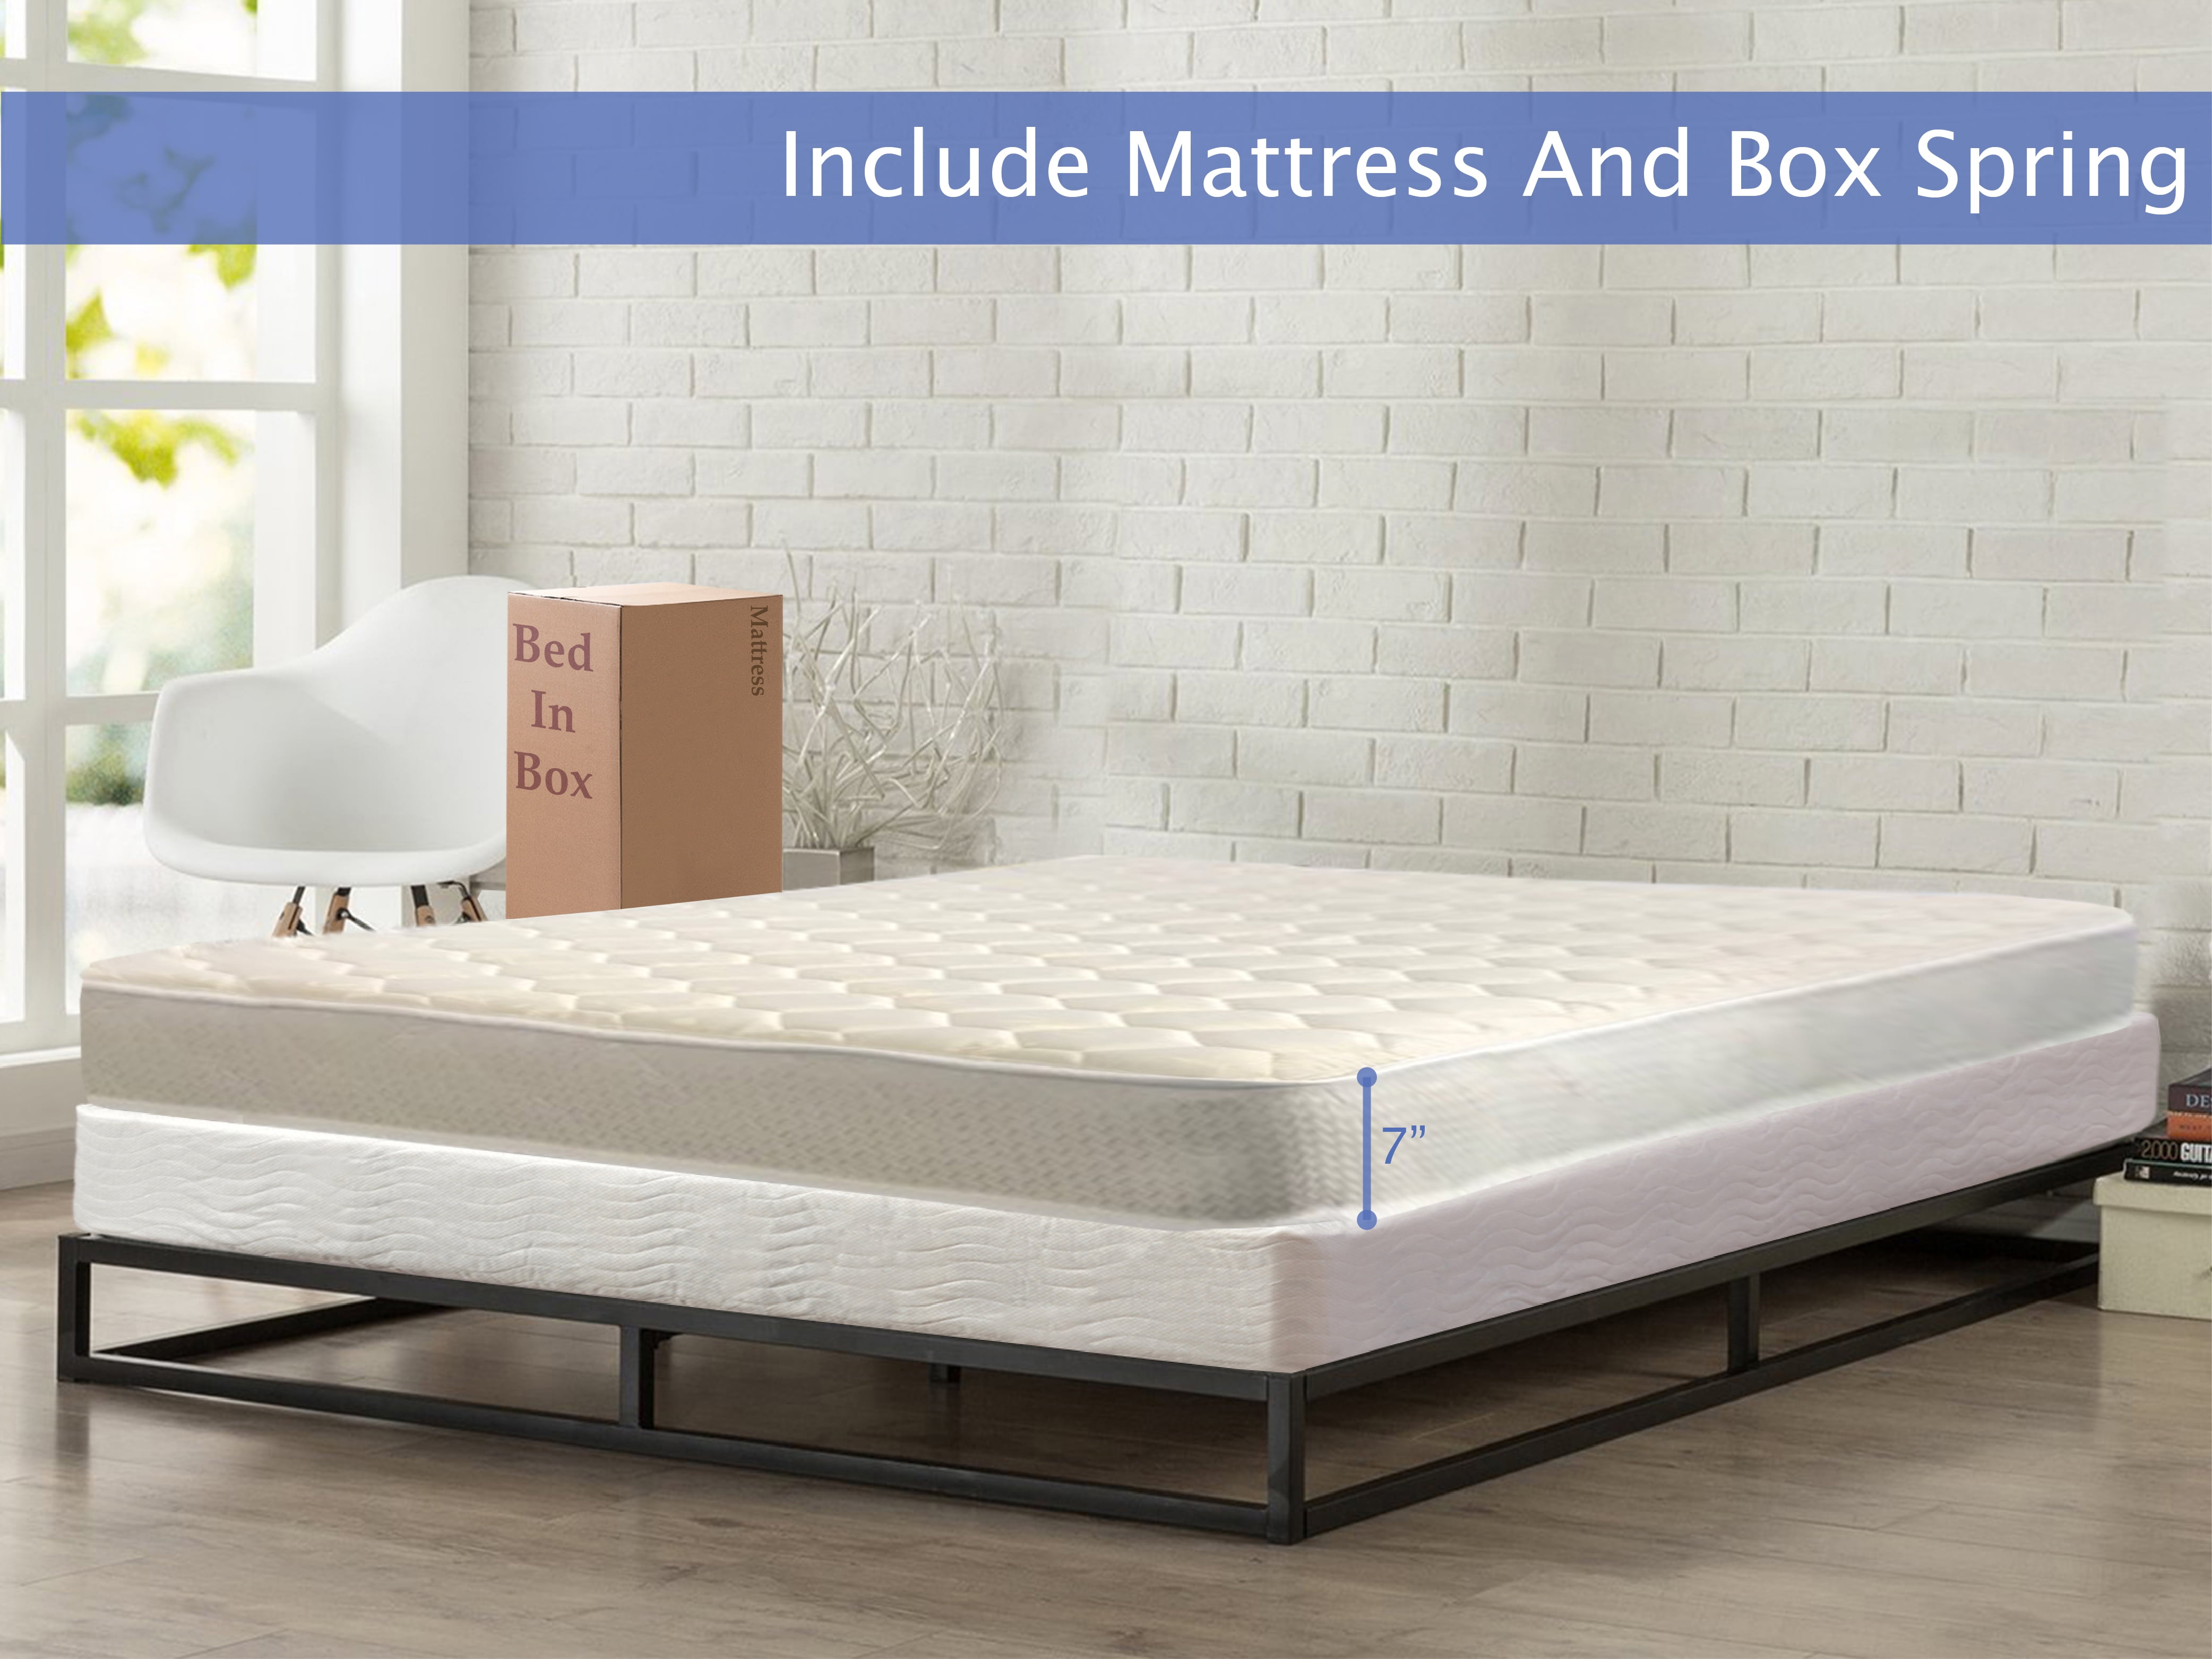 7.5 inch boxspring mattress